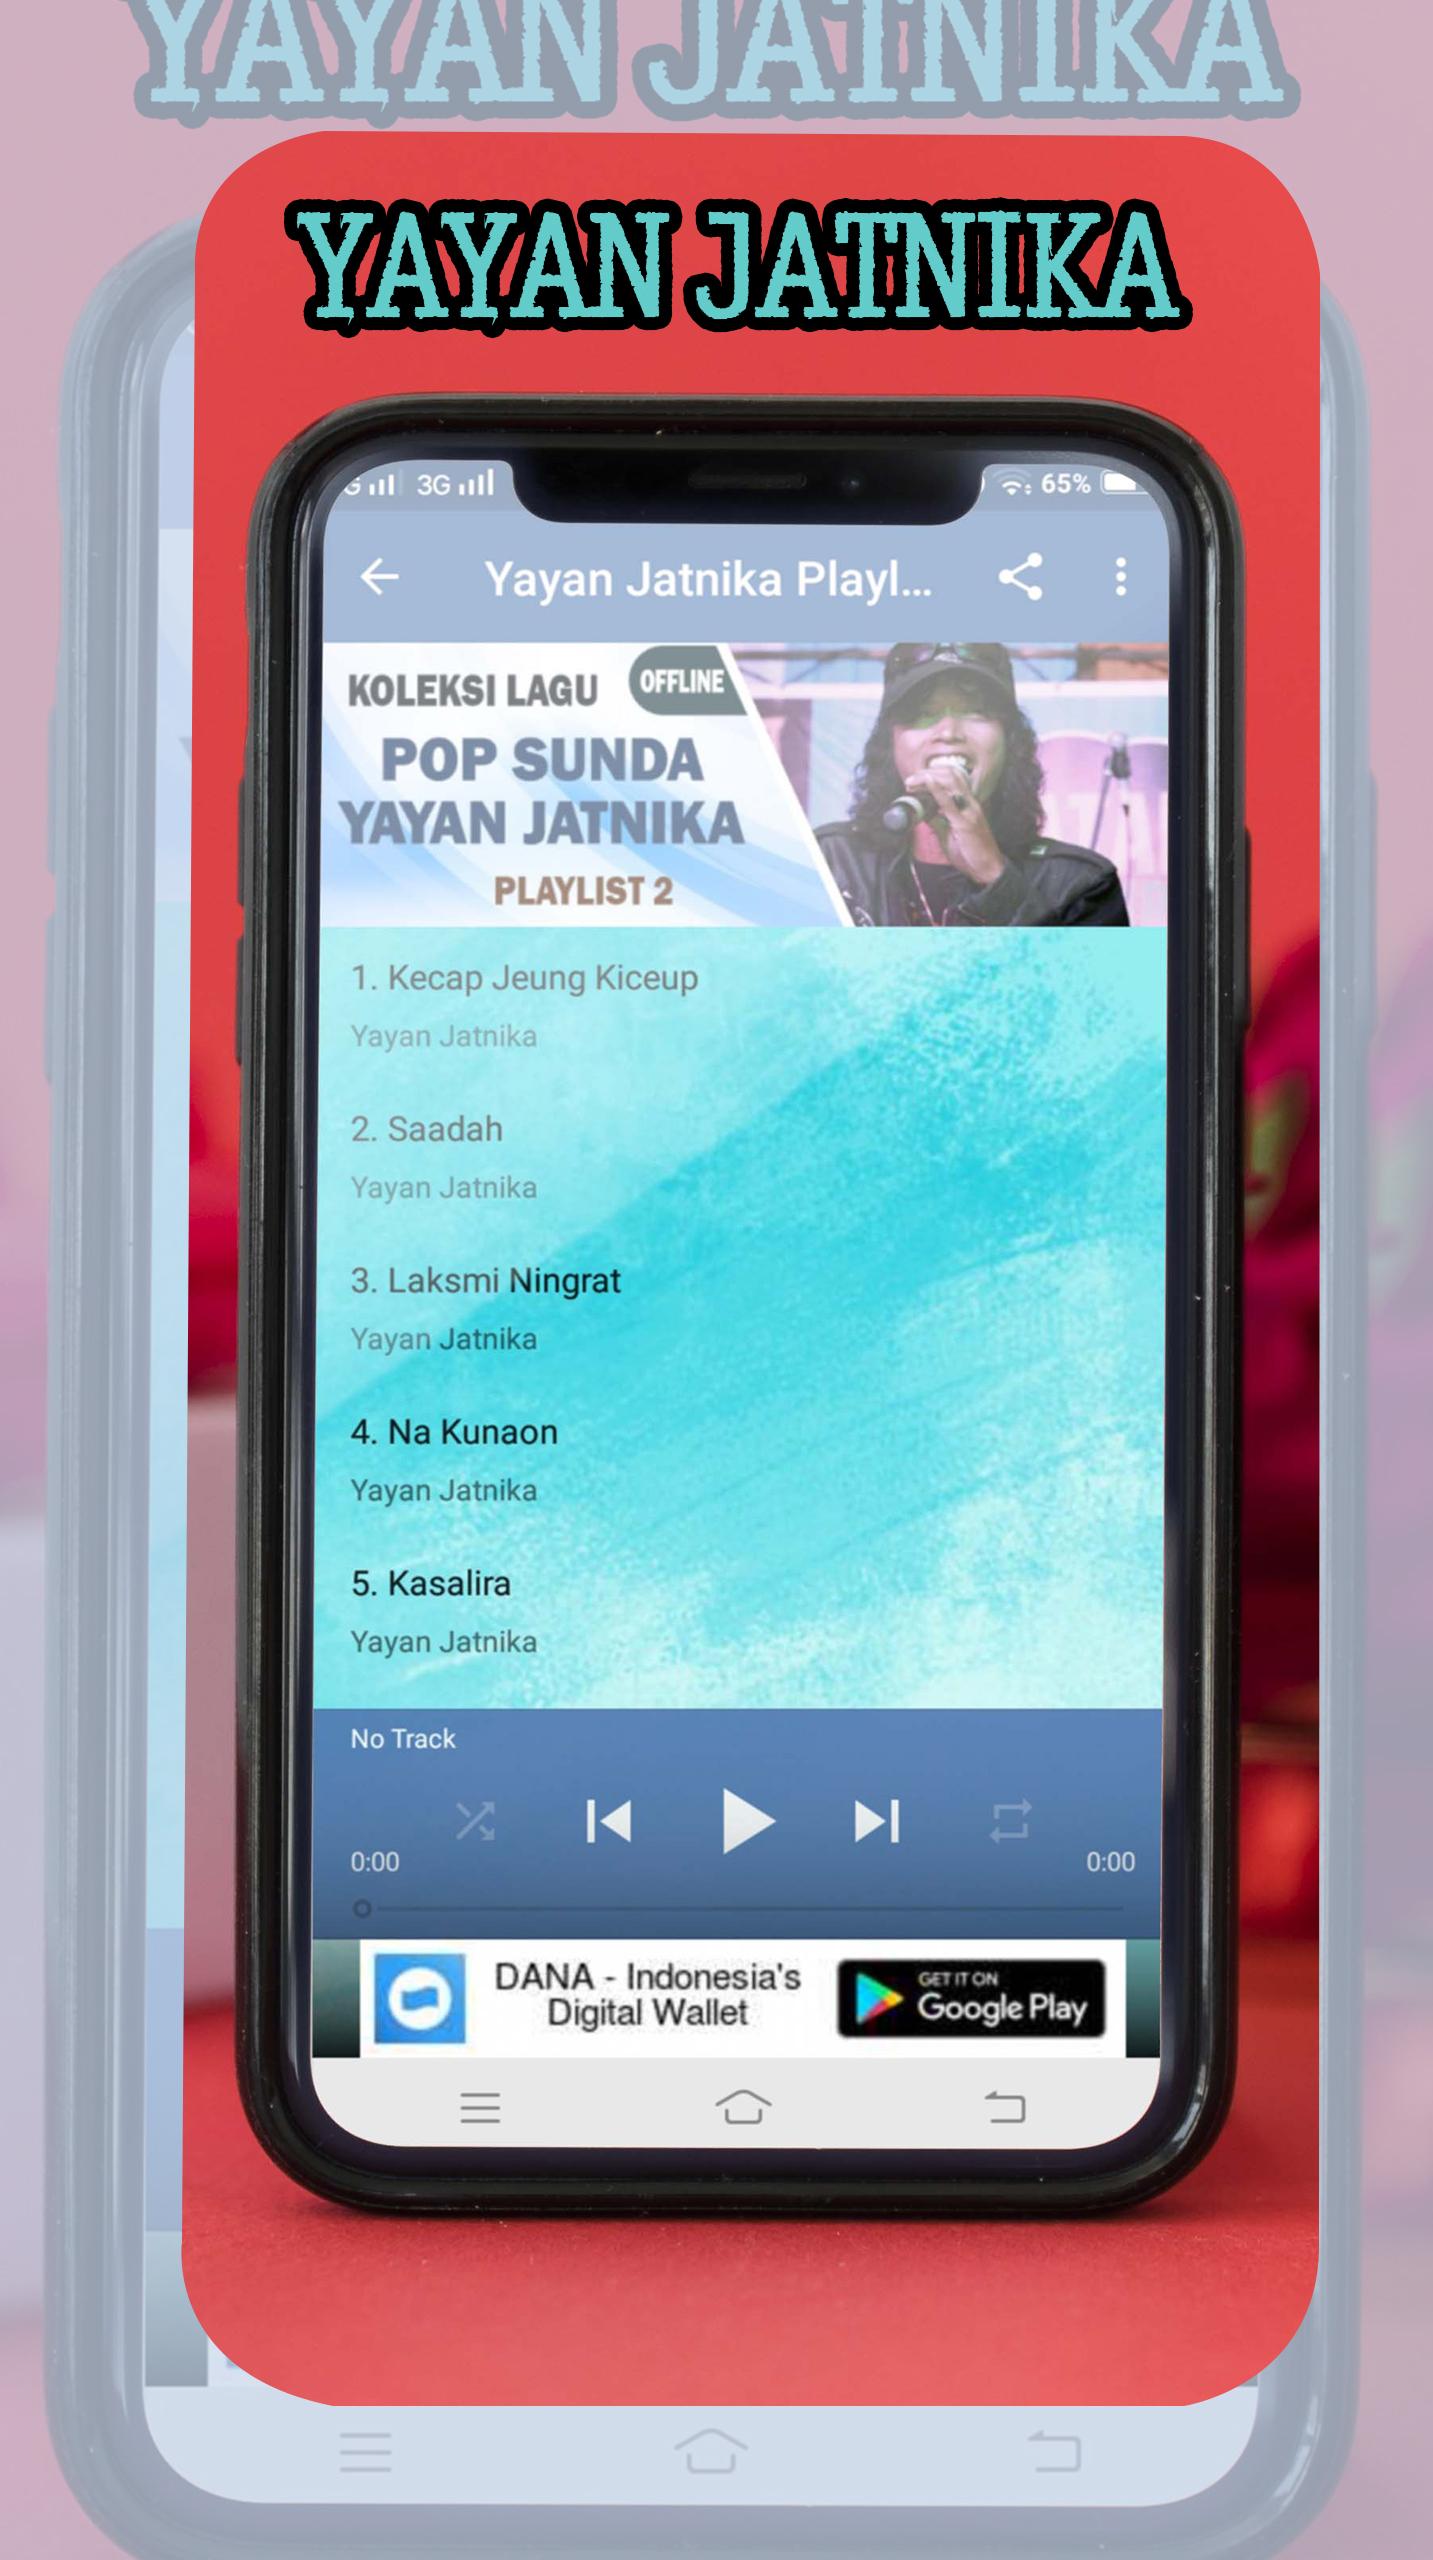 Lirik Lagu Pop Sunda Yayan Jatnika Mp3 Offline Pour Android Telechargez L Apk